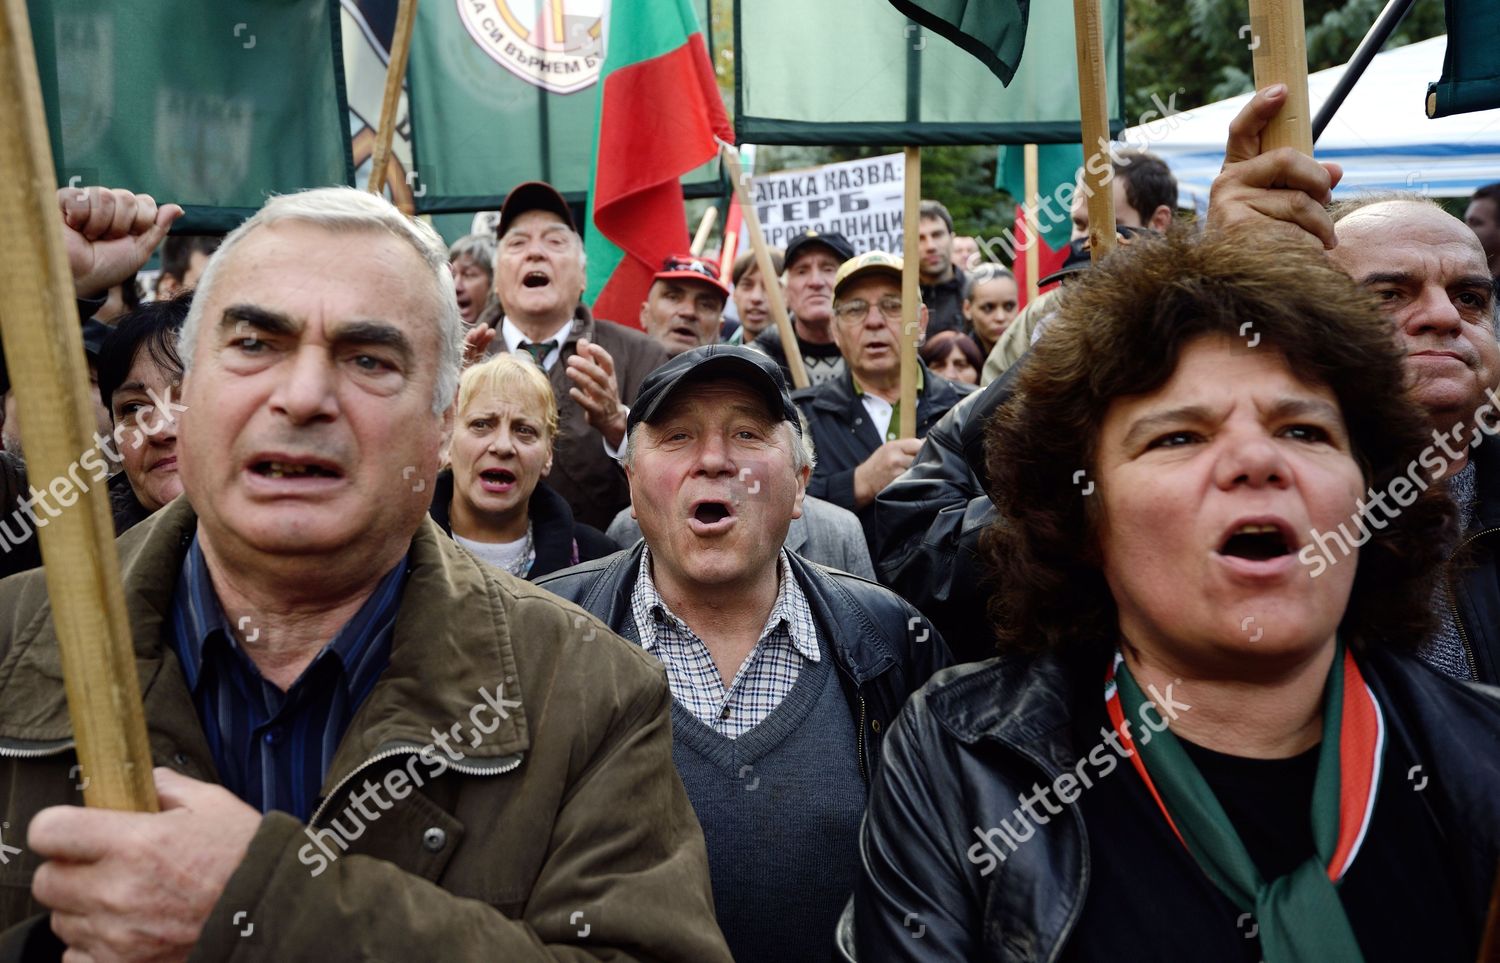 bulgaria-muslims-trial-oct-2012-shutterstock-editorial-7750035a.jpg